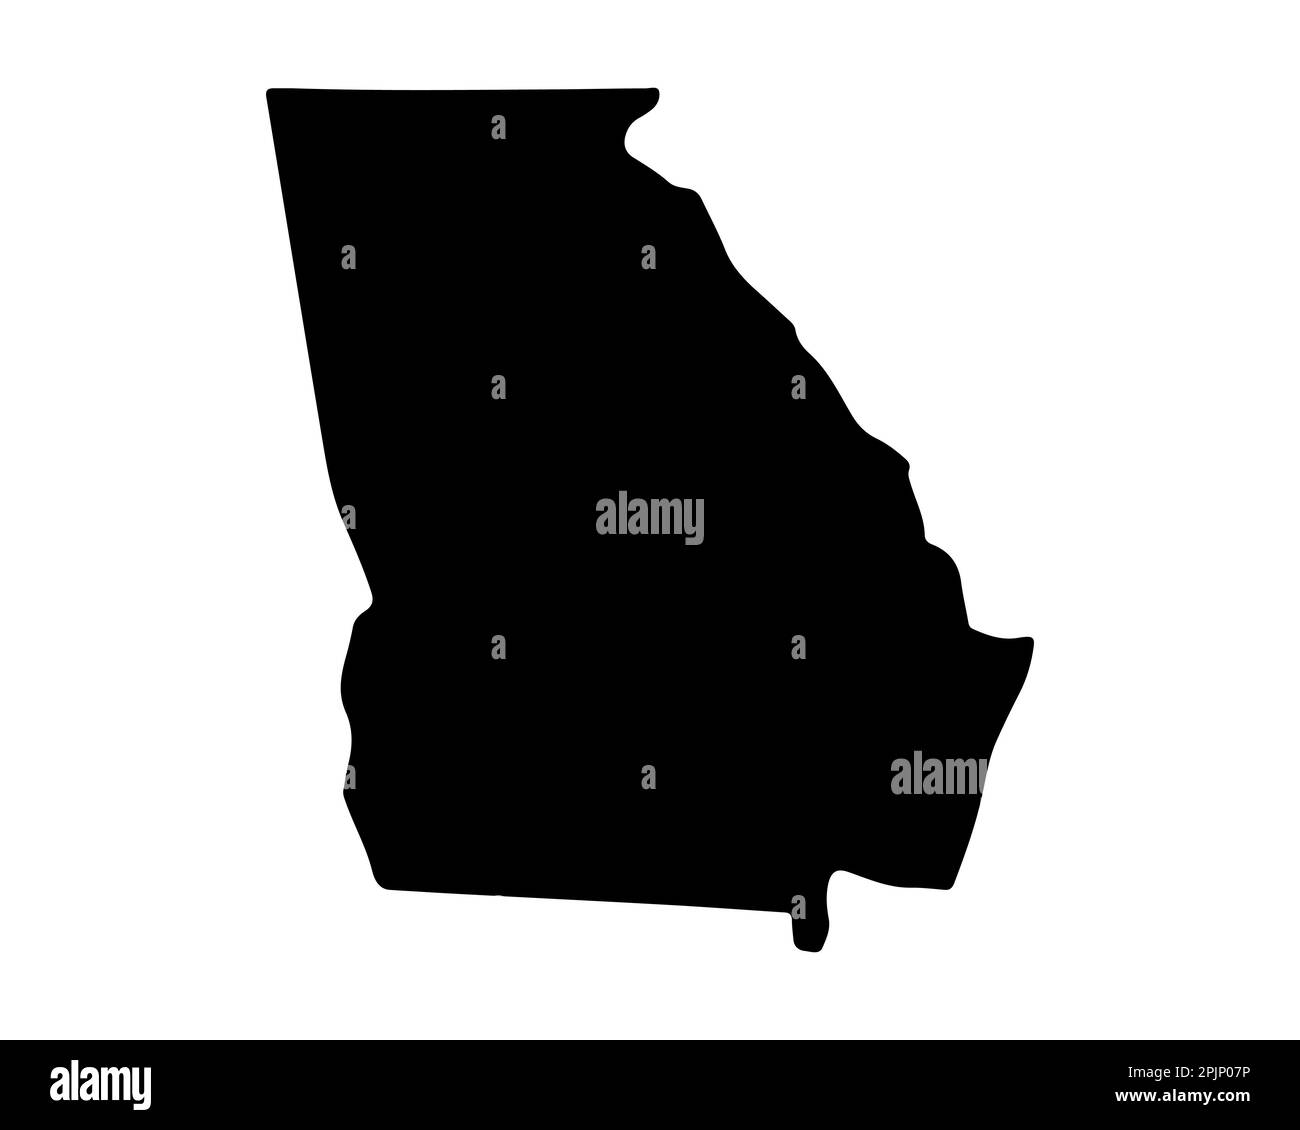 Georgia state map. US state map. Georgia silhouette symbol. Vector illustration Stock Vector